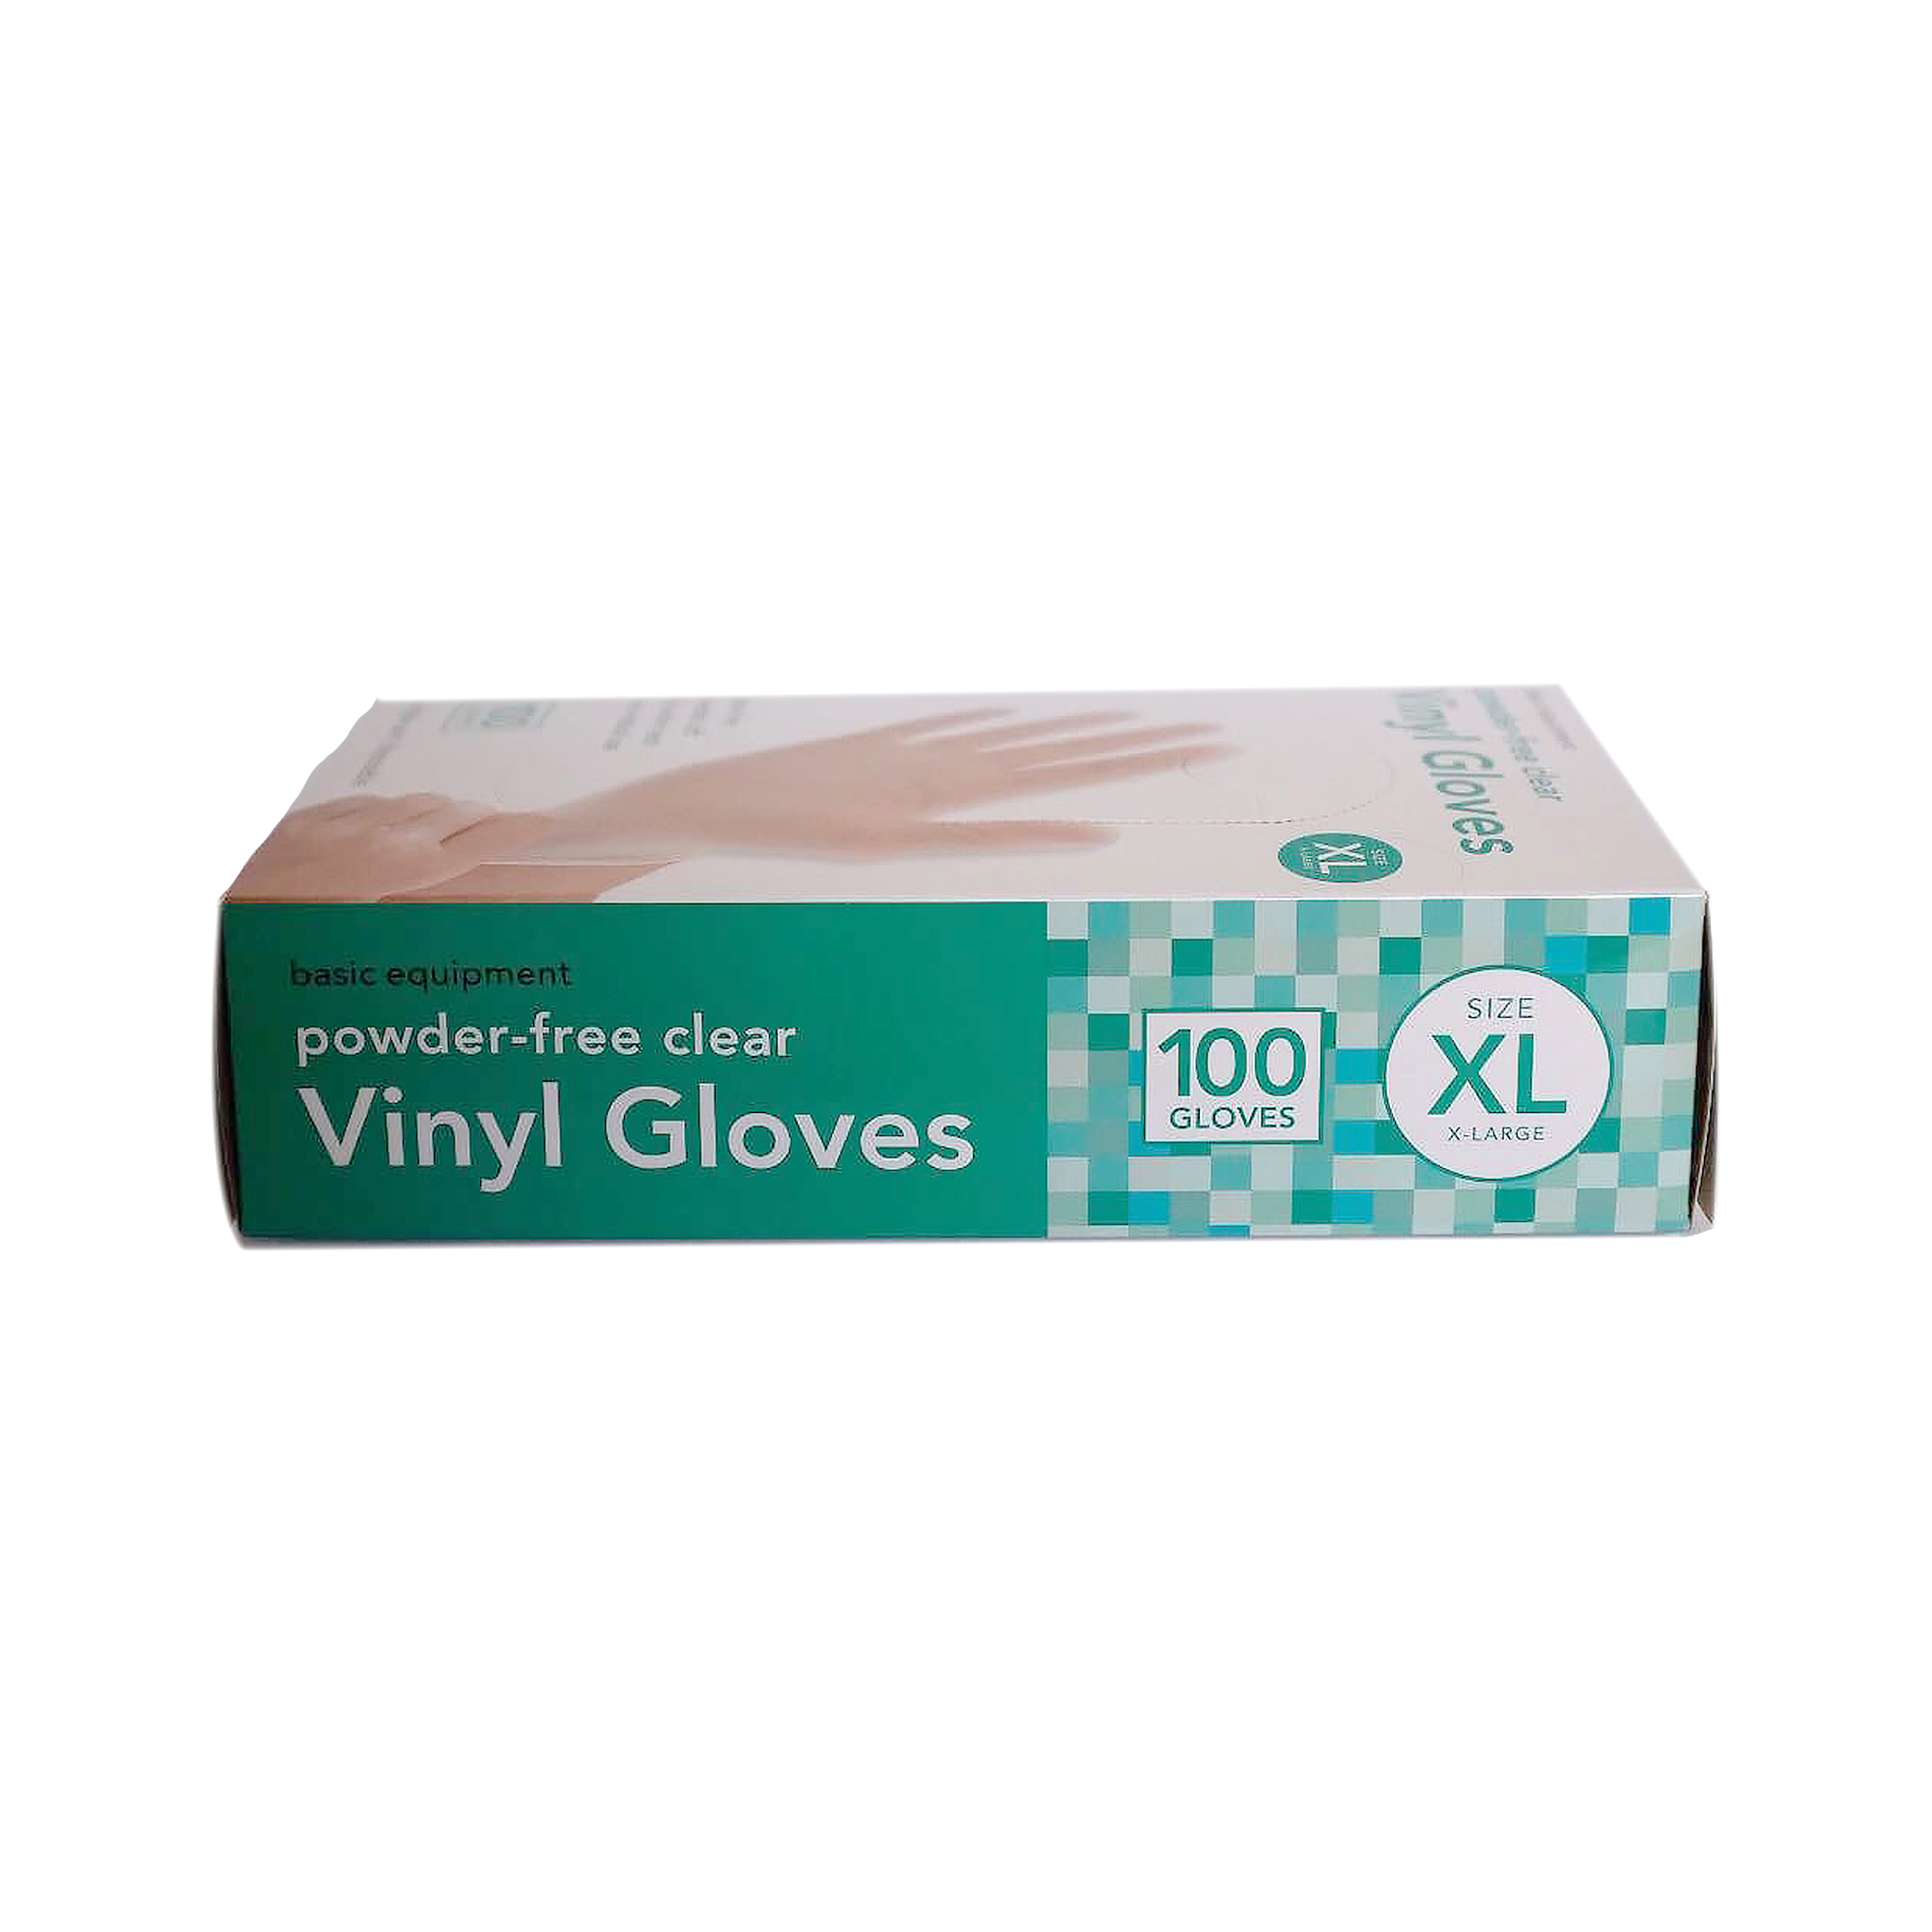 Basic Equipment XL Vinyl Disposable Gloves, 100ct. - image 3 of 3